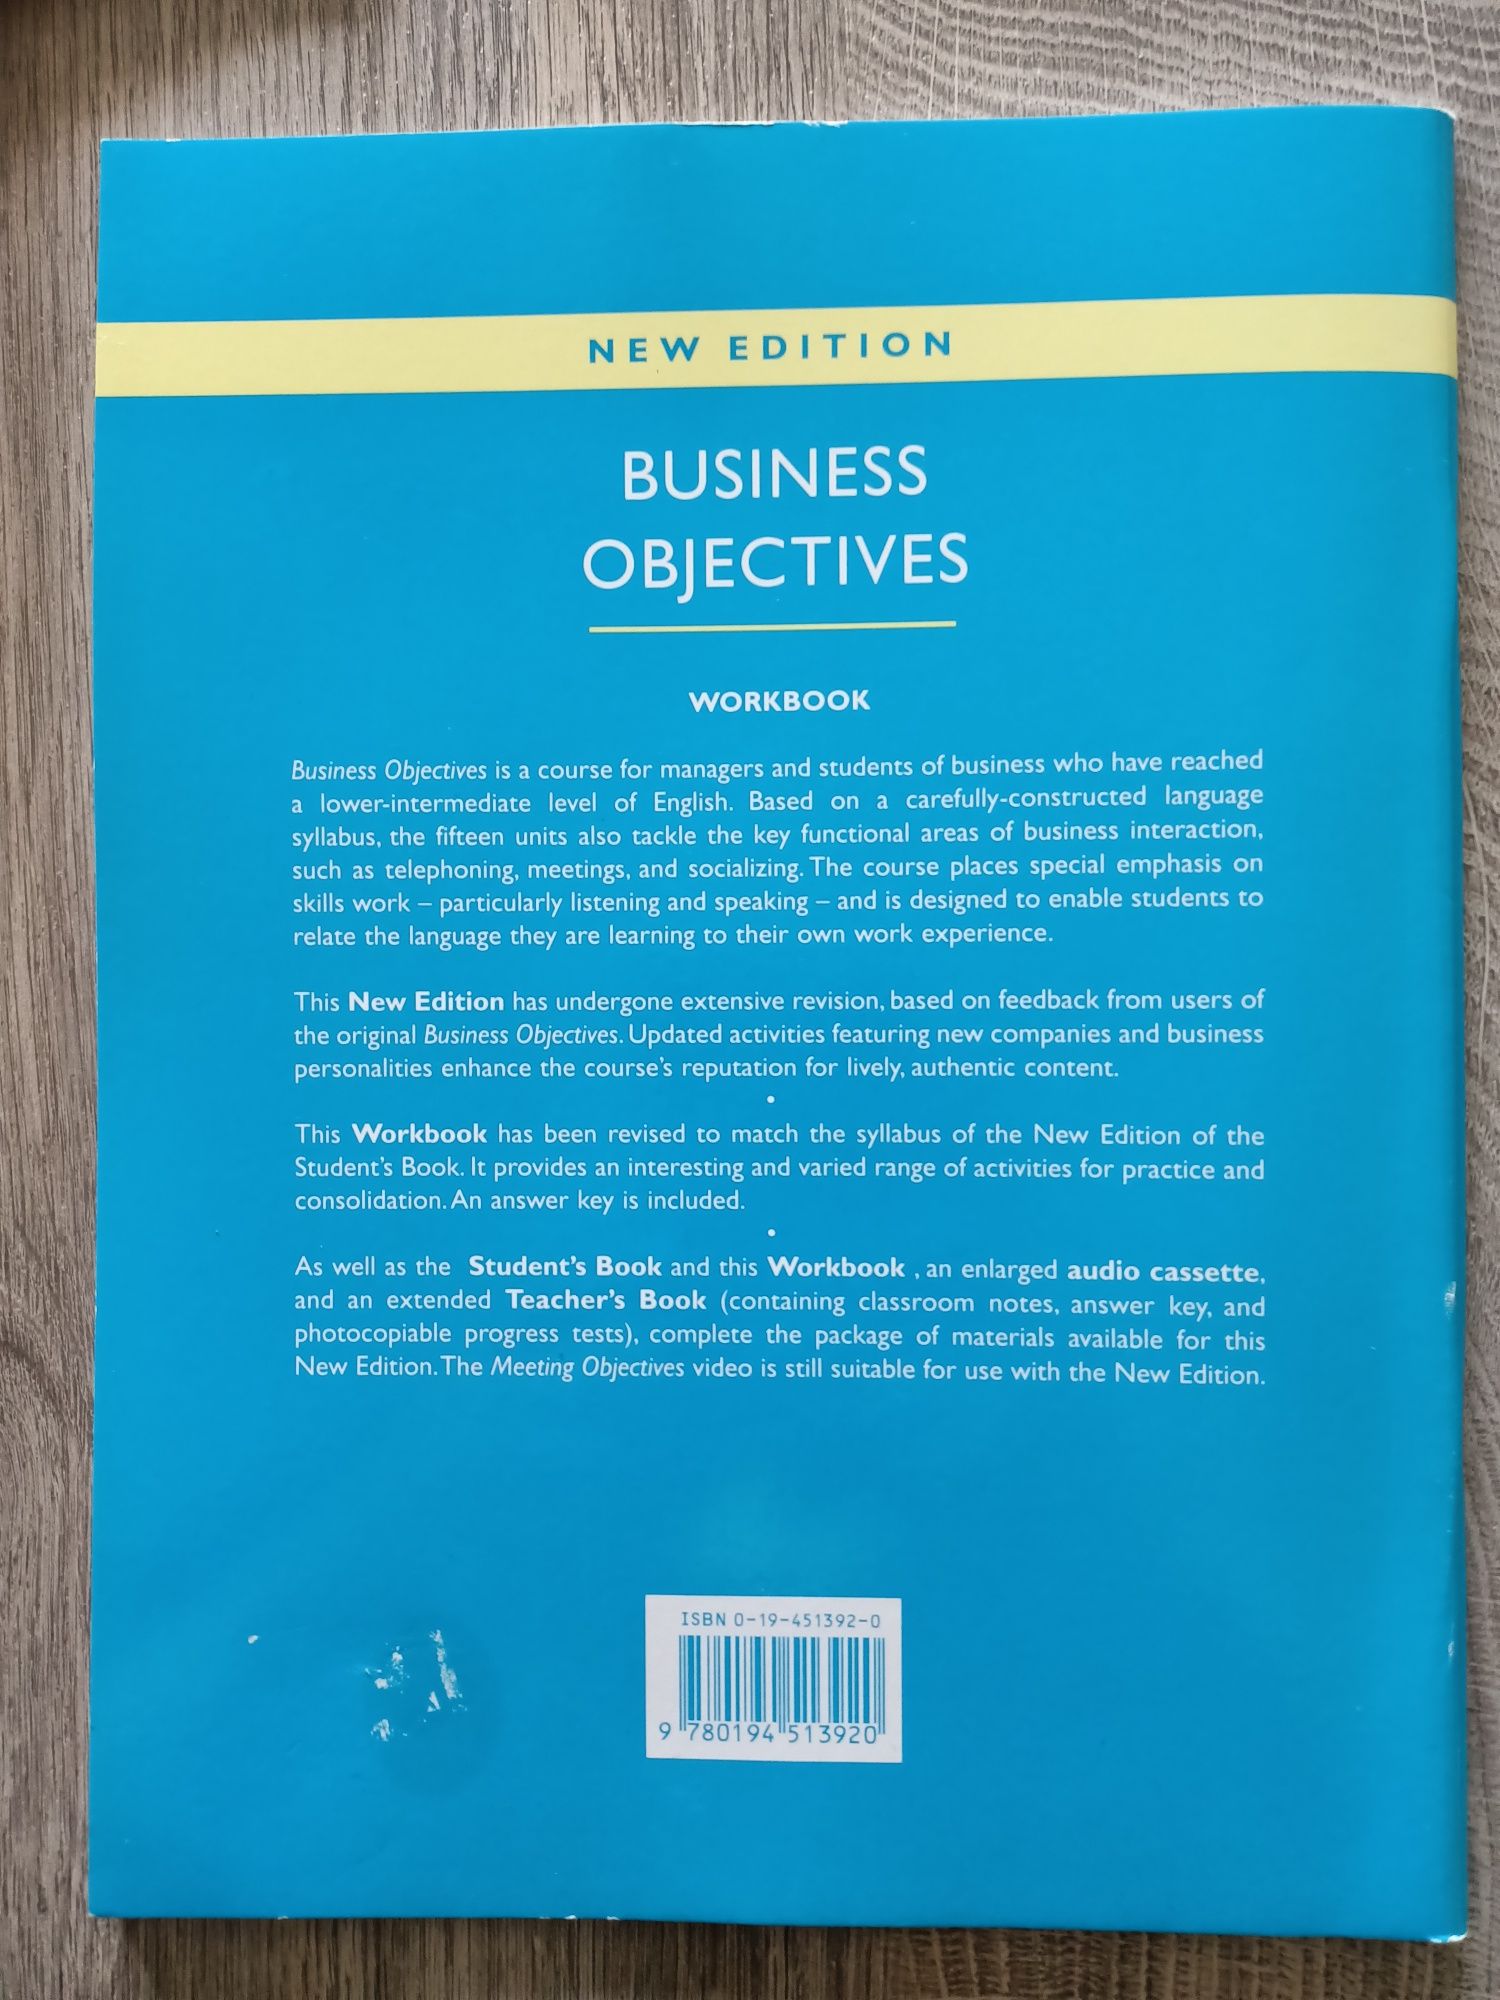 Business objective workbook